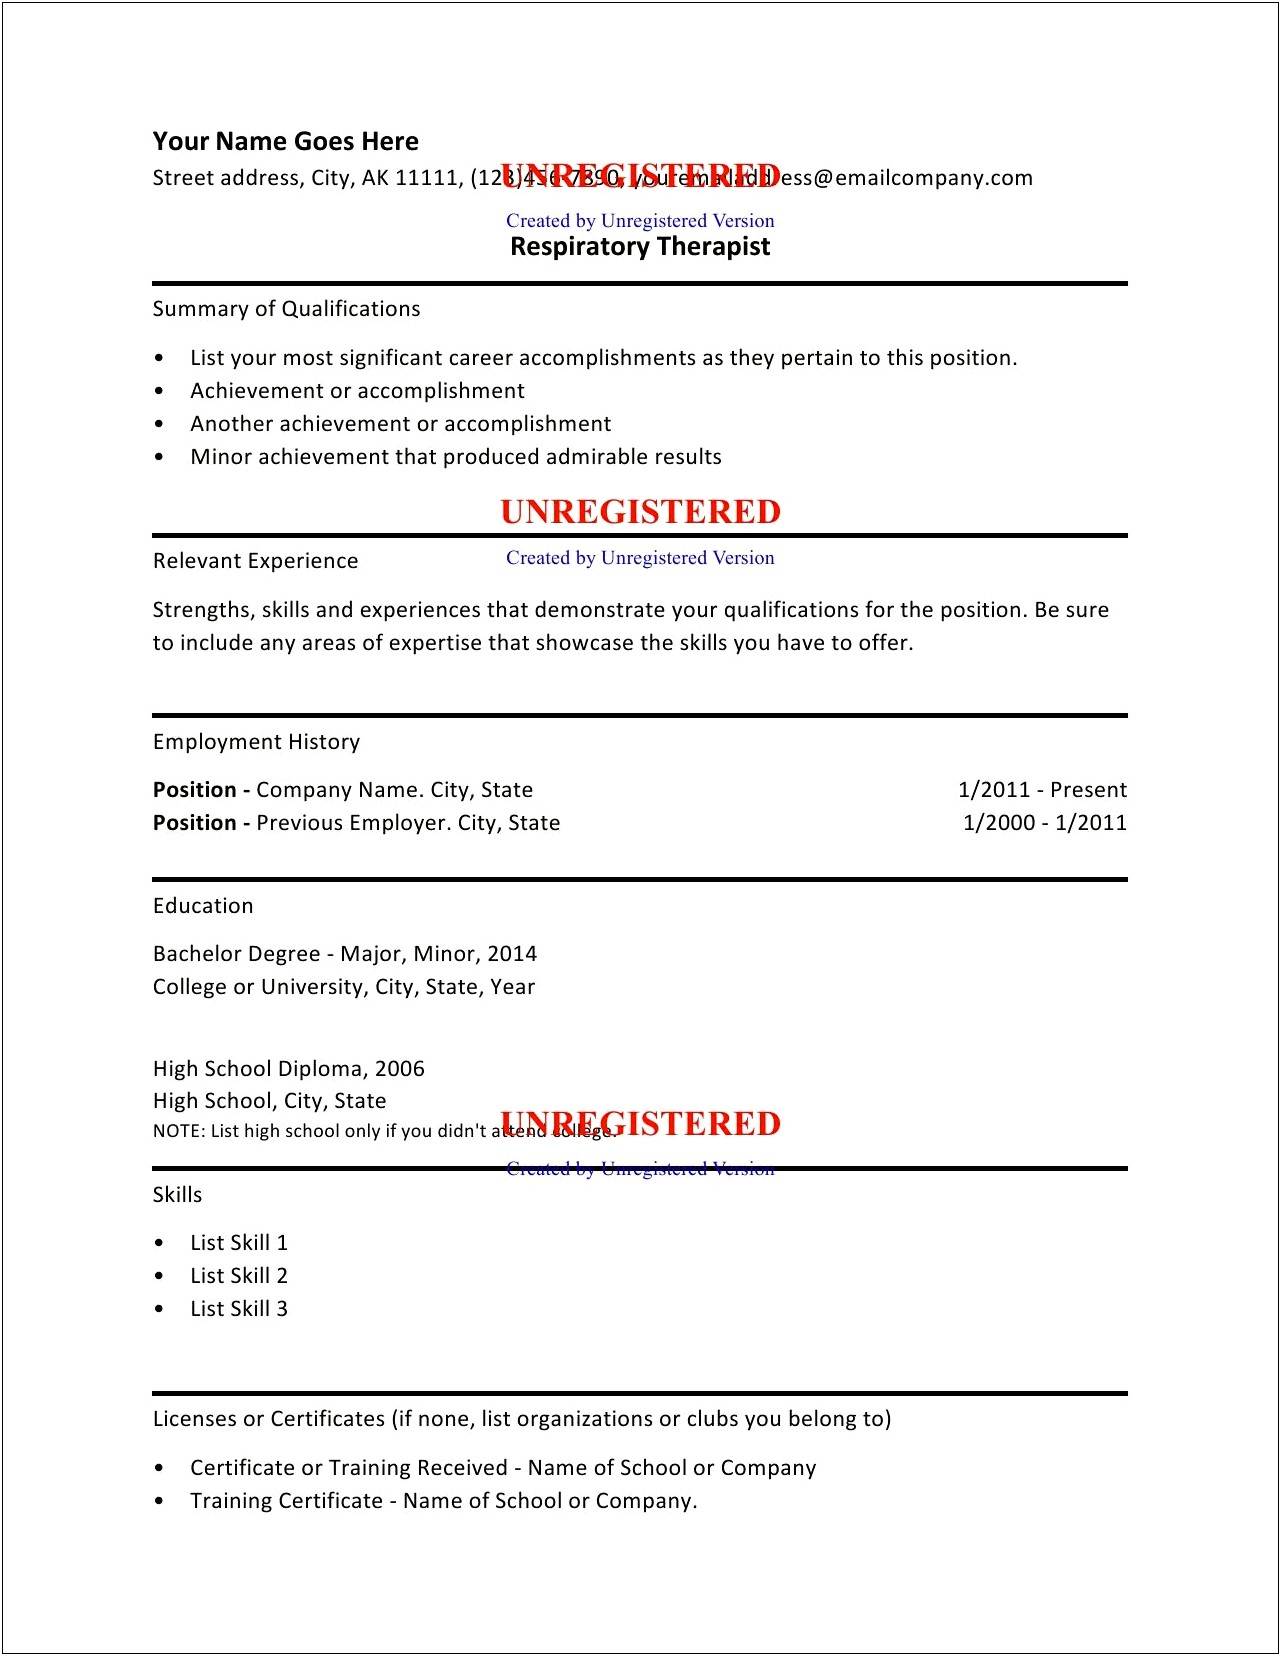 Resume Sample For Respiratory Therapist